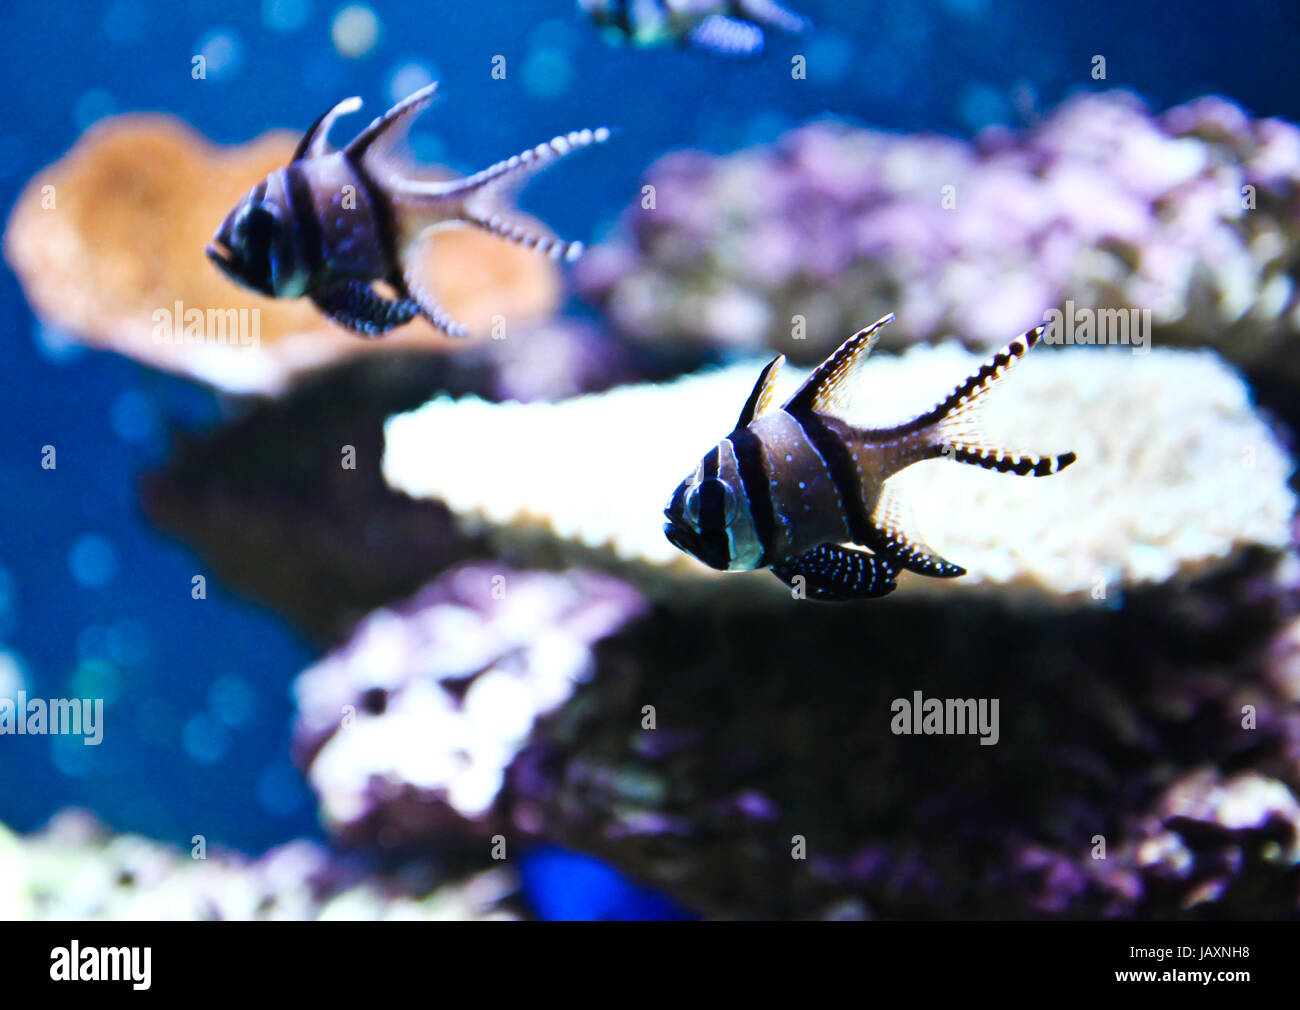 Fish in aquarium desktop wallpaper hi-res stock photography and images -  Alamy